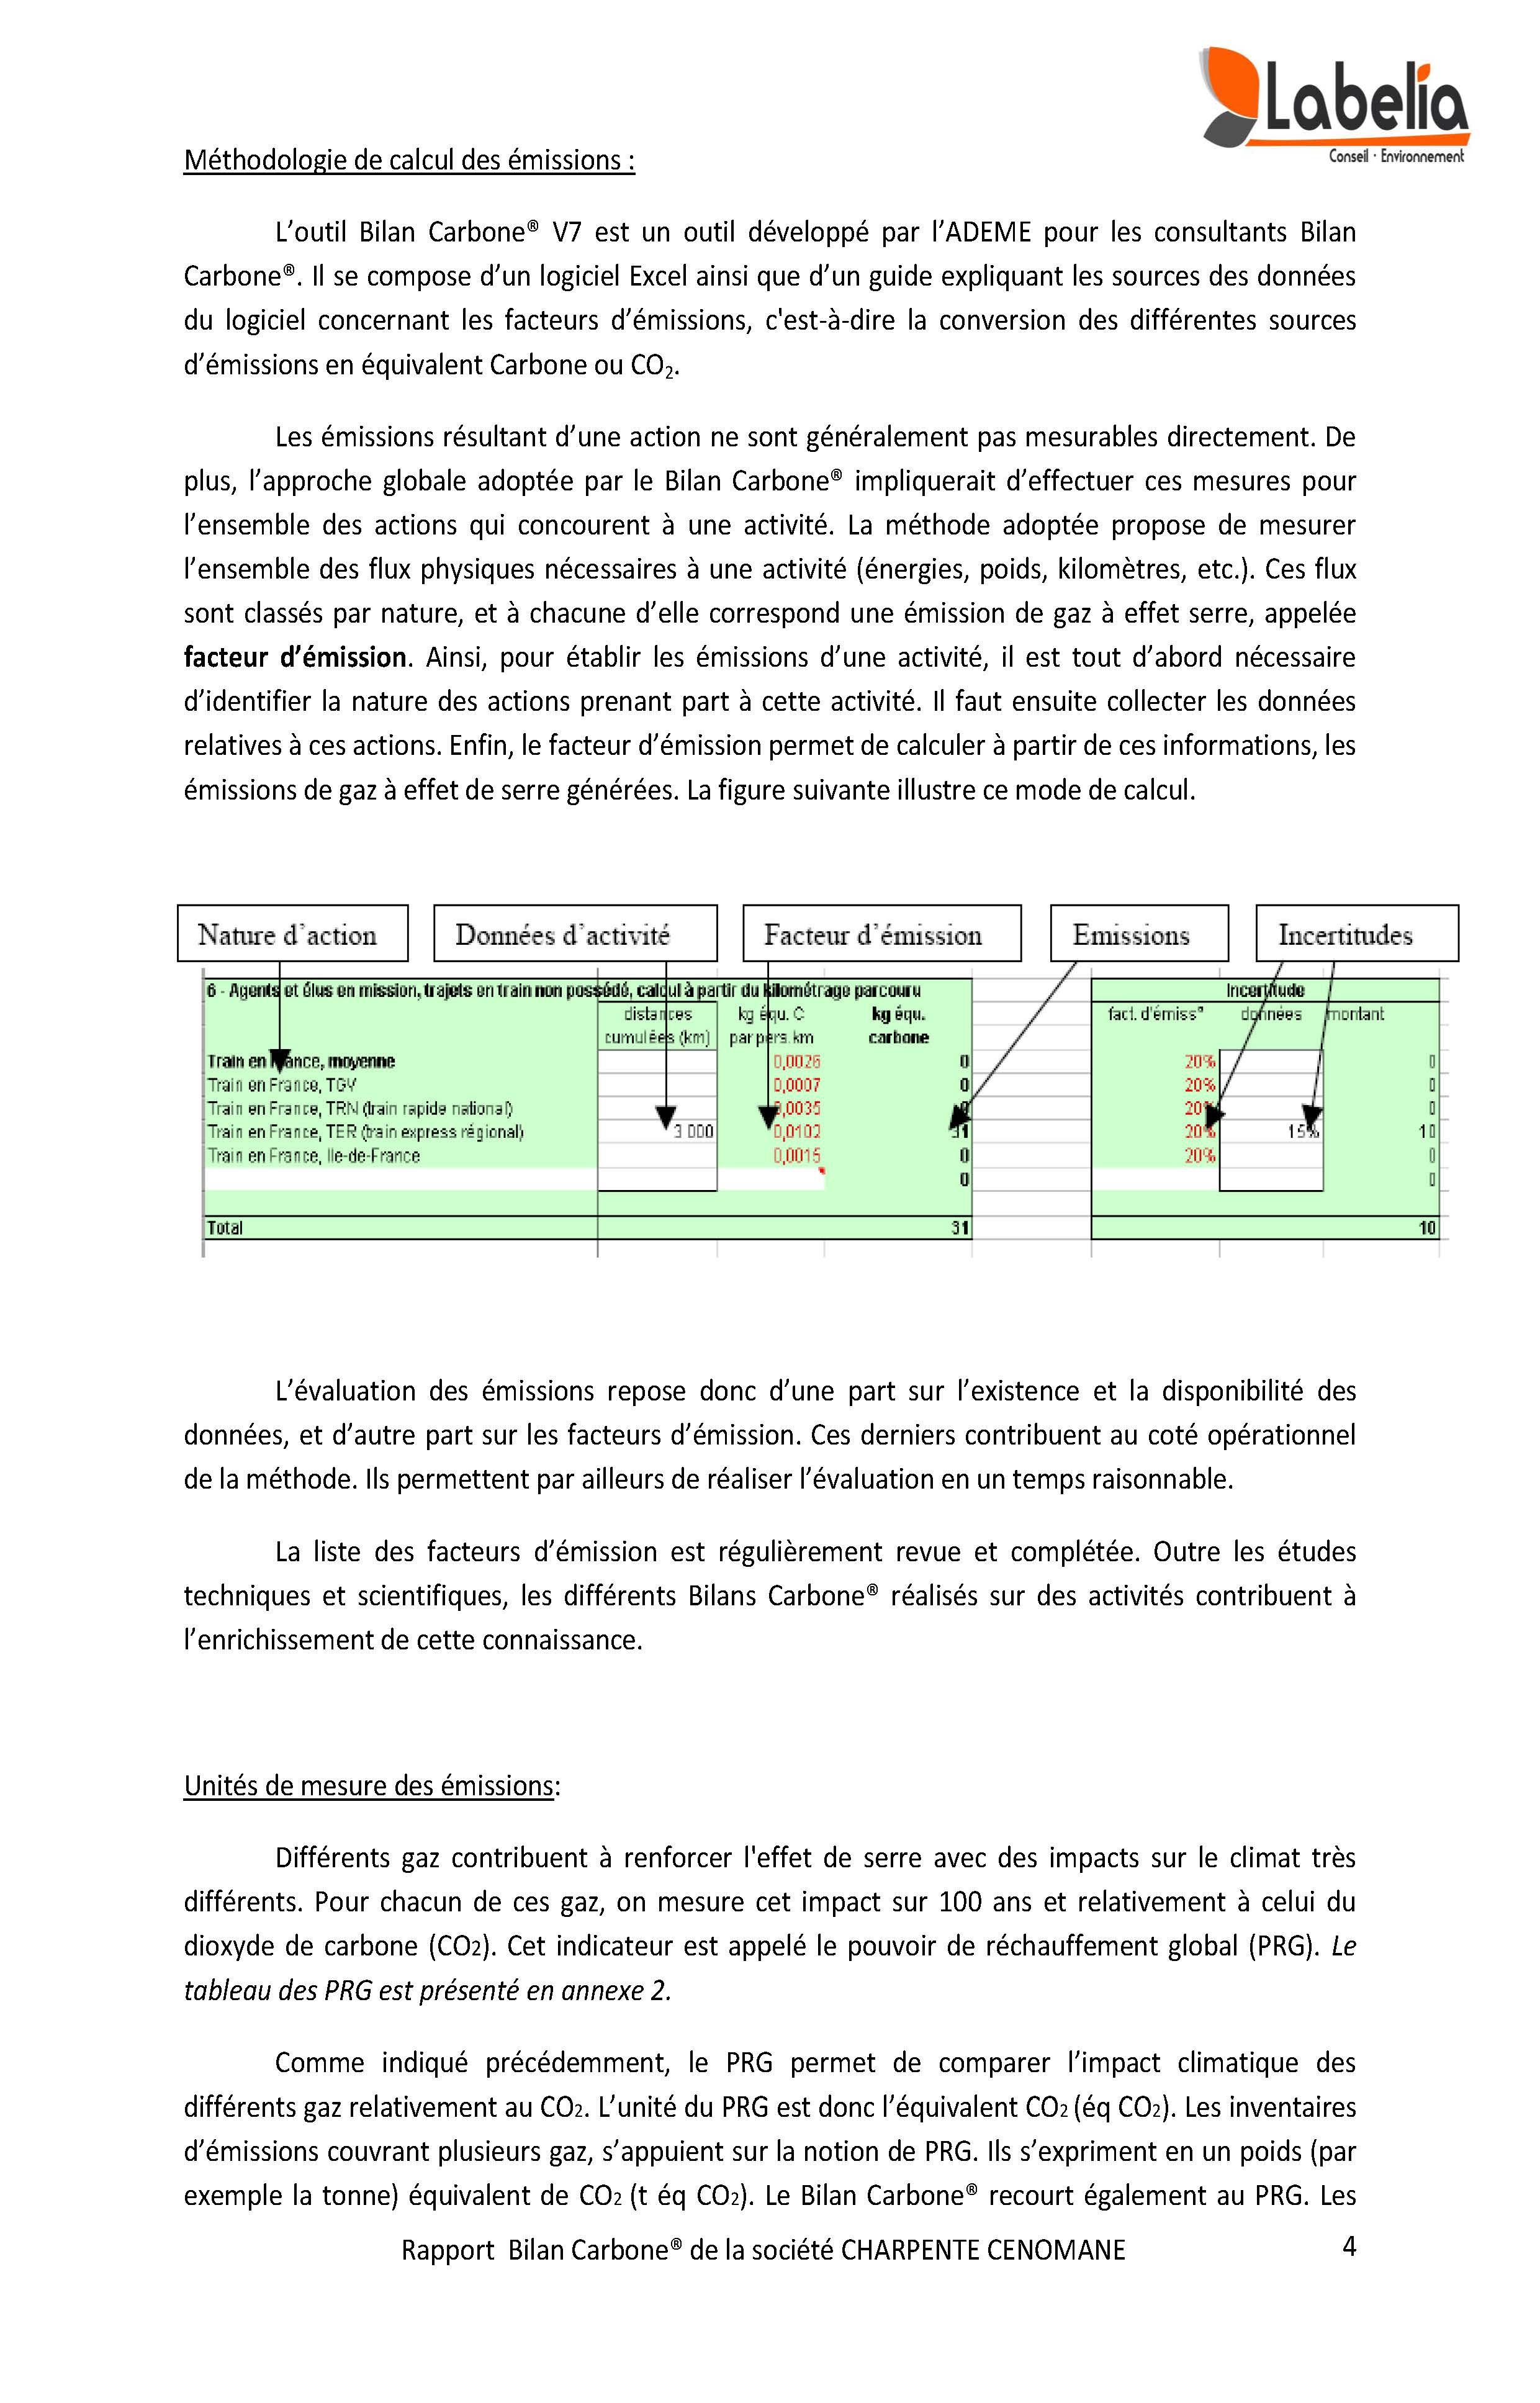 Rapport Bilan Carbone 2013 Page 04